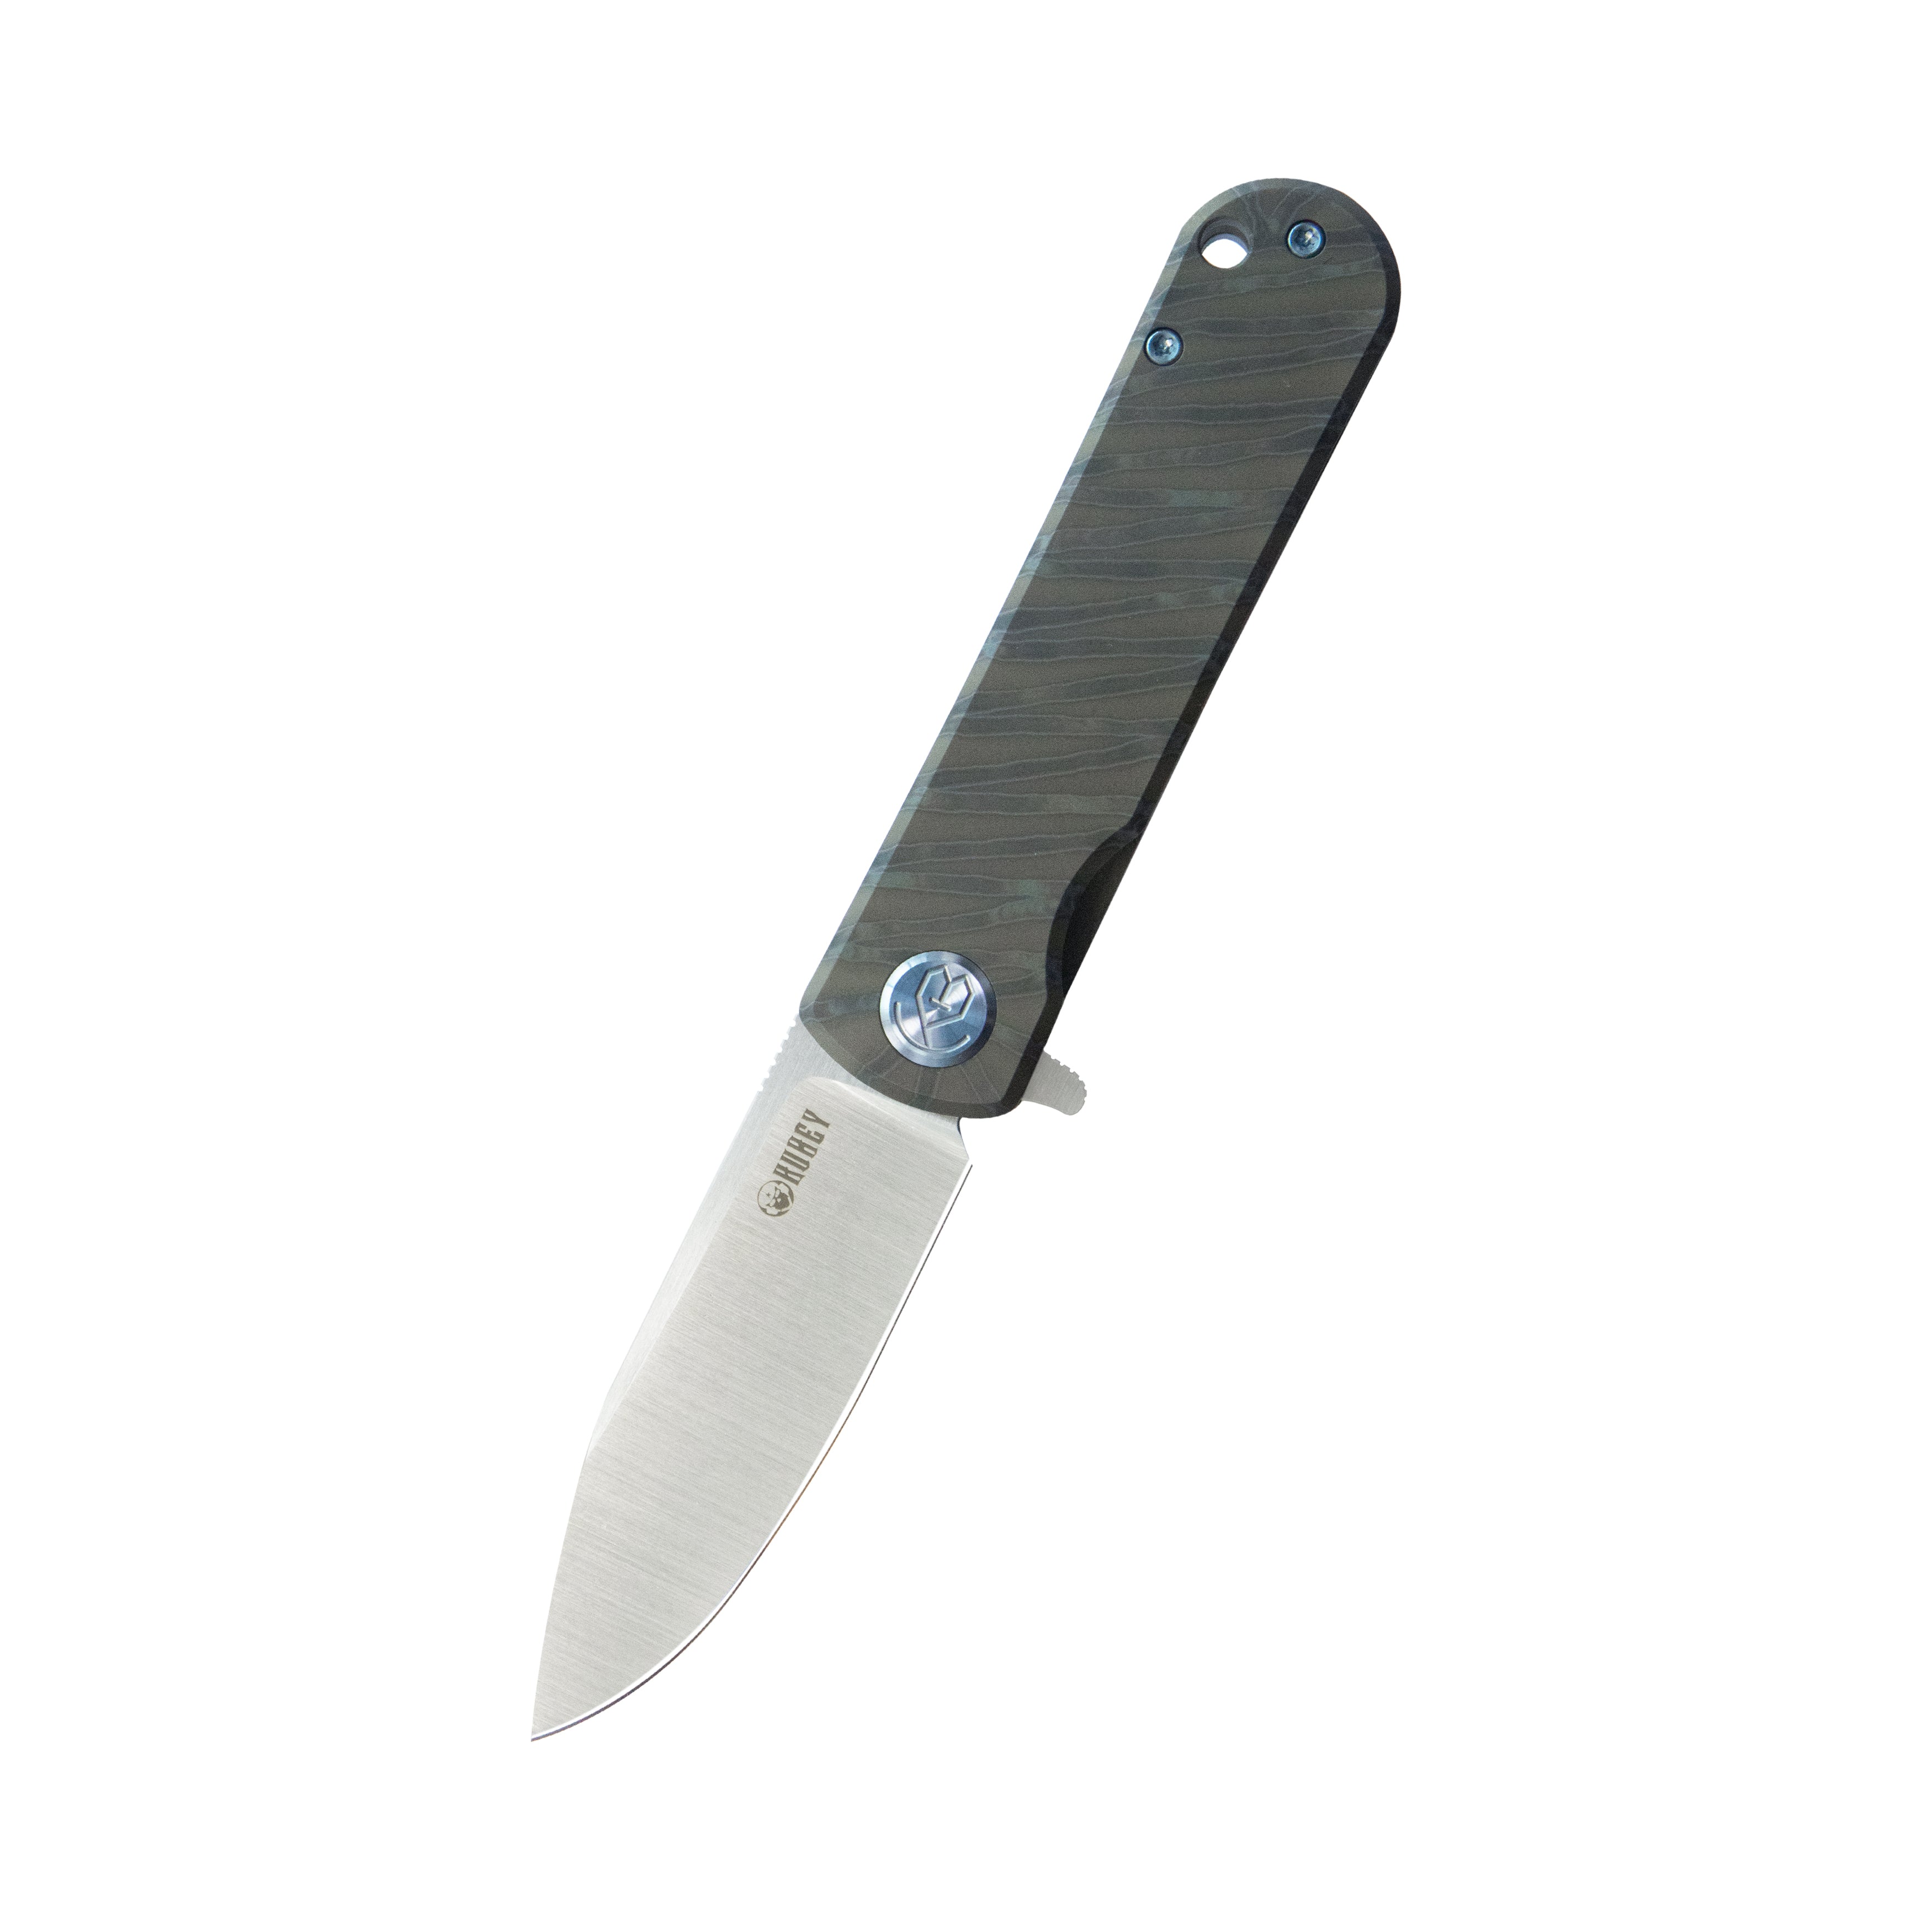 Kubey NEO Flipper Gentlemans Knife Flame Titanium Handle 2.99" Belt Satin S35VN Blade KB359B